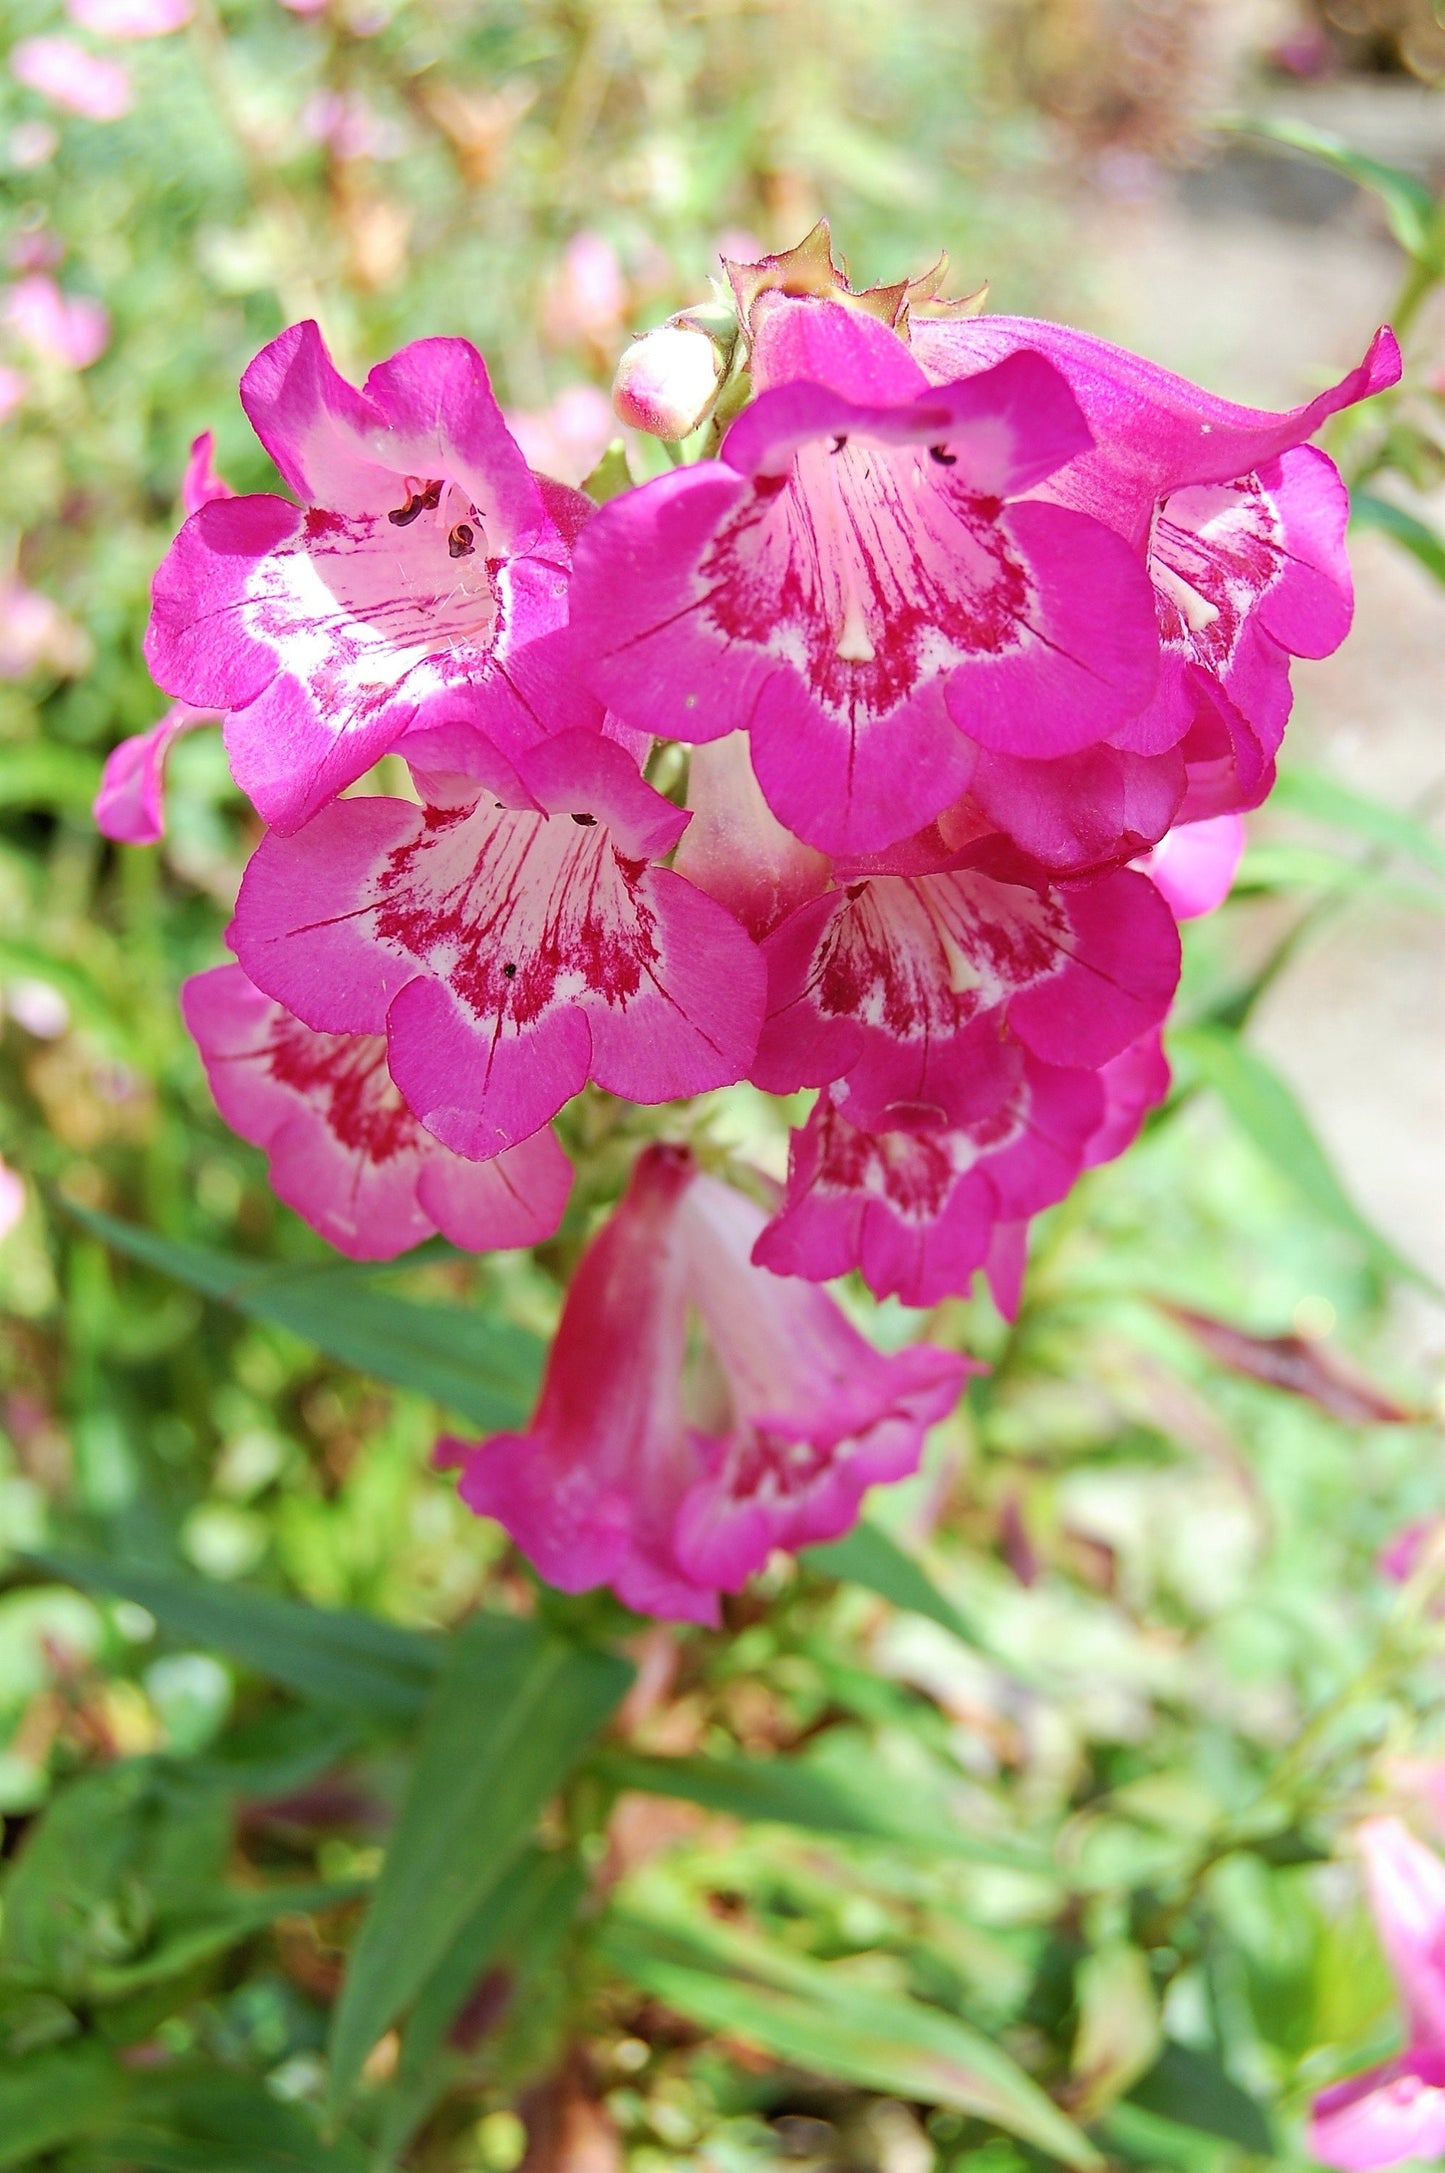 100 SENSATION MIX PENSTEMON Hartwegii Beardtongue Mixed Colors Two Tone Red, Pink, White, Purple, White Flower Seeds